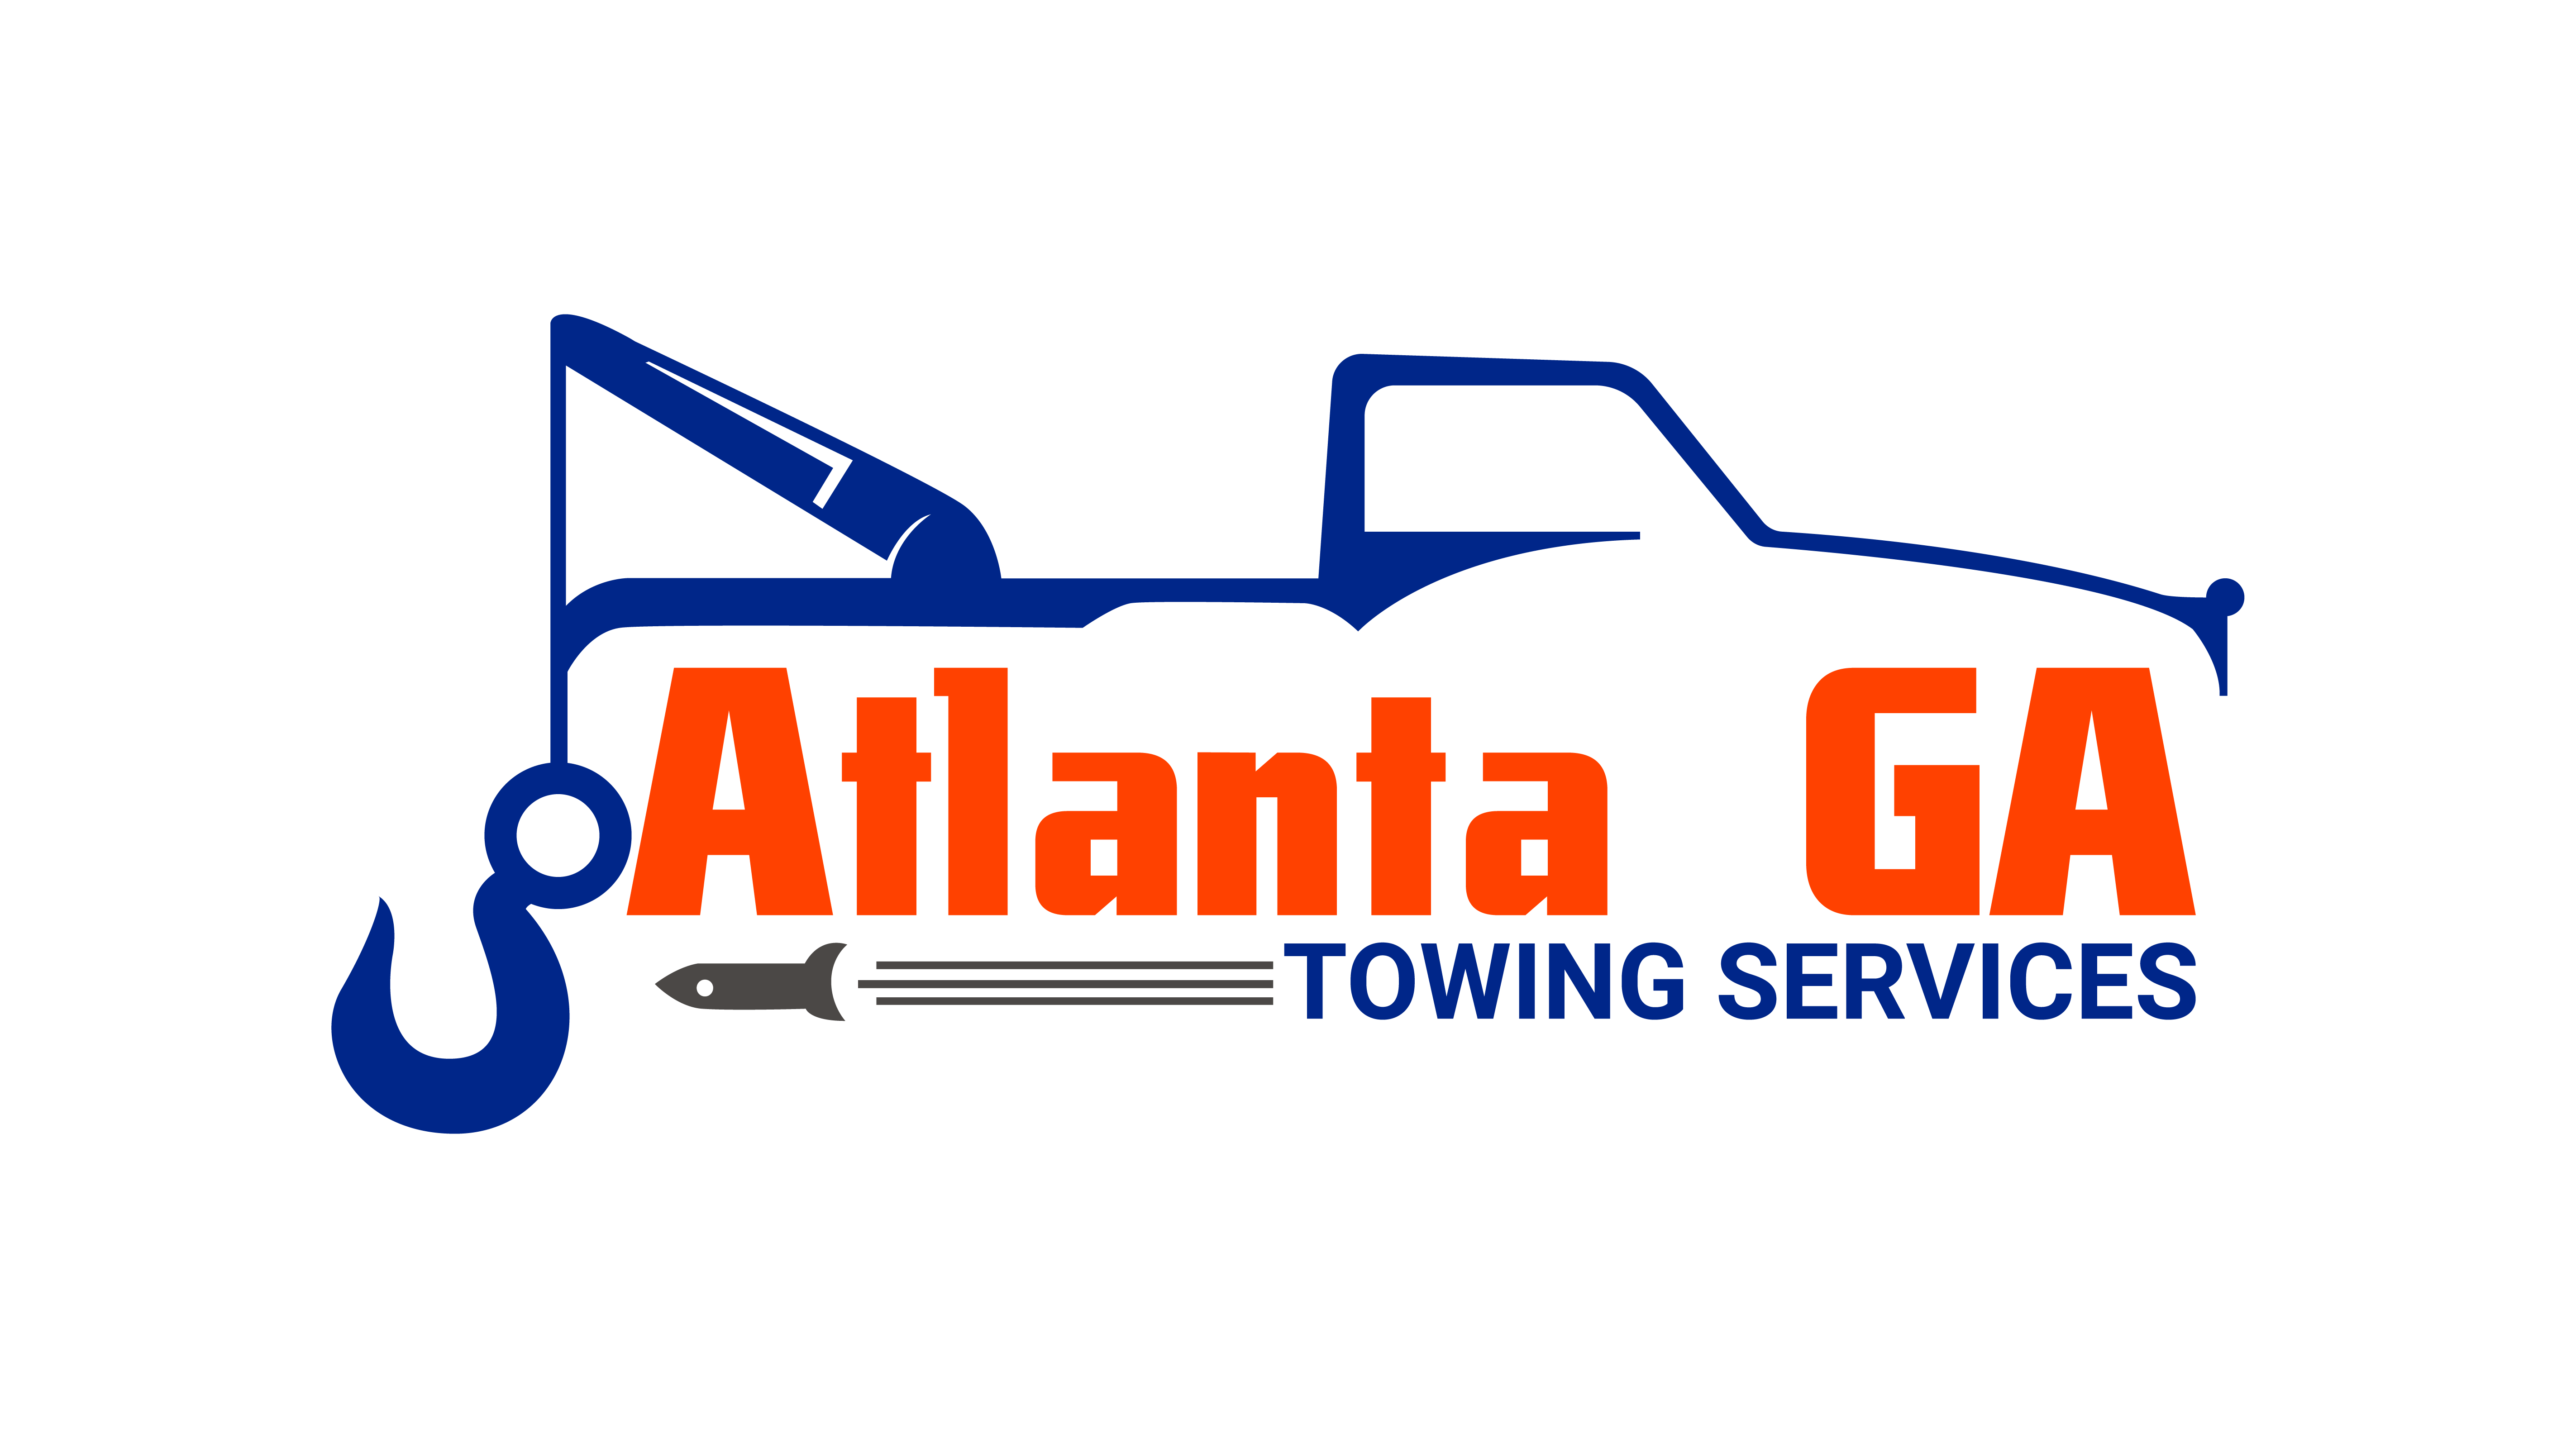 Atlanta GA Towing Service - 24 Hour Emergency Roadside Assistance Service